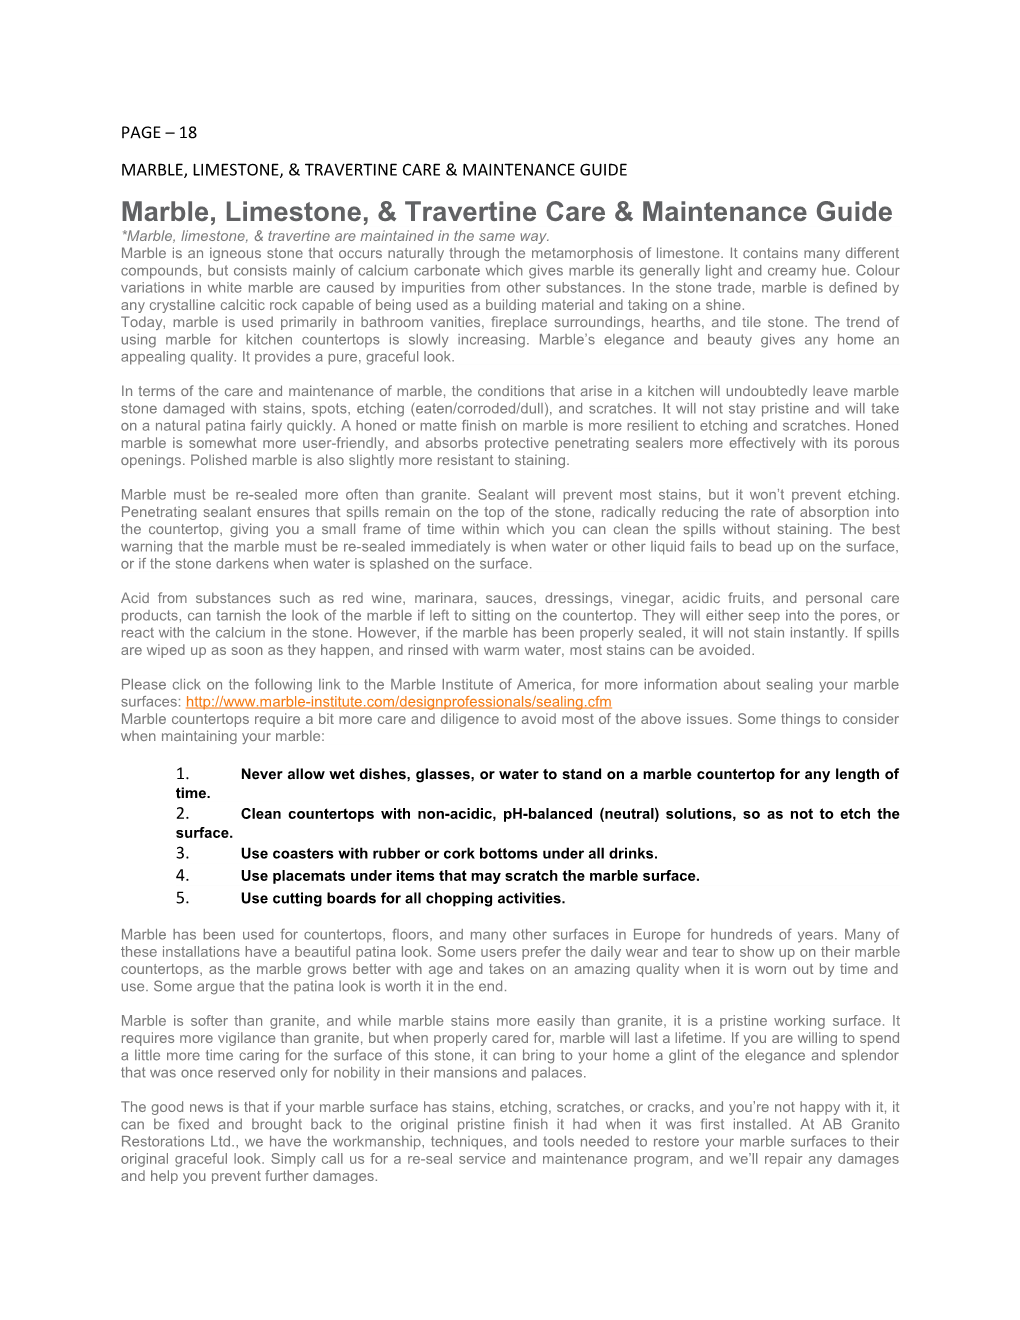 Marble, Limestone, & Travertine Care & Maintenance Guide